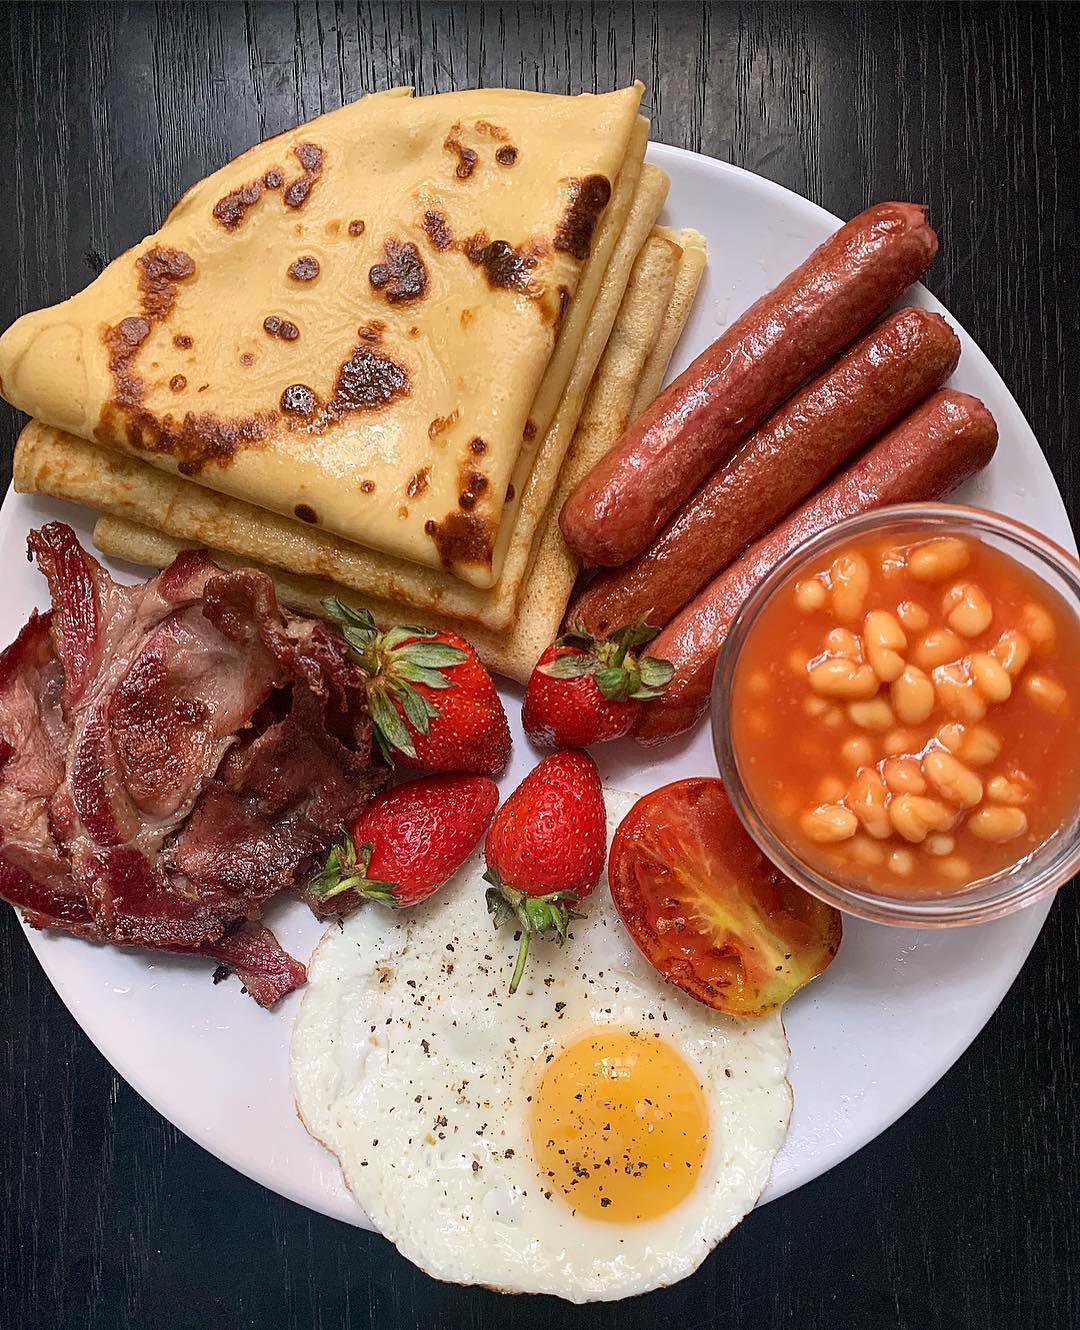 Easy Technique For Making The Best Full English Breakfast